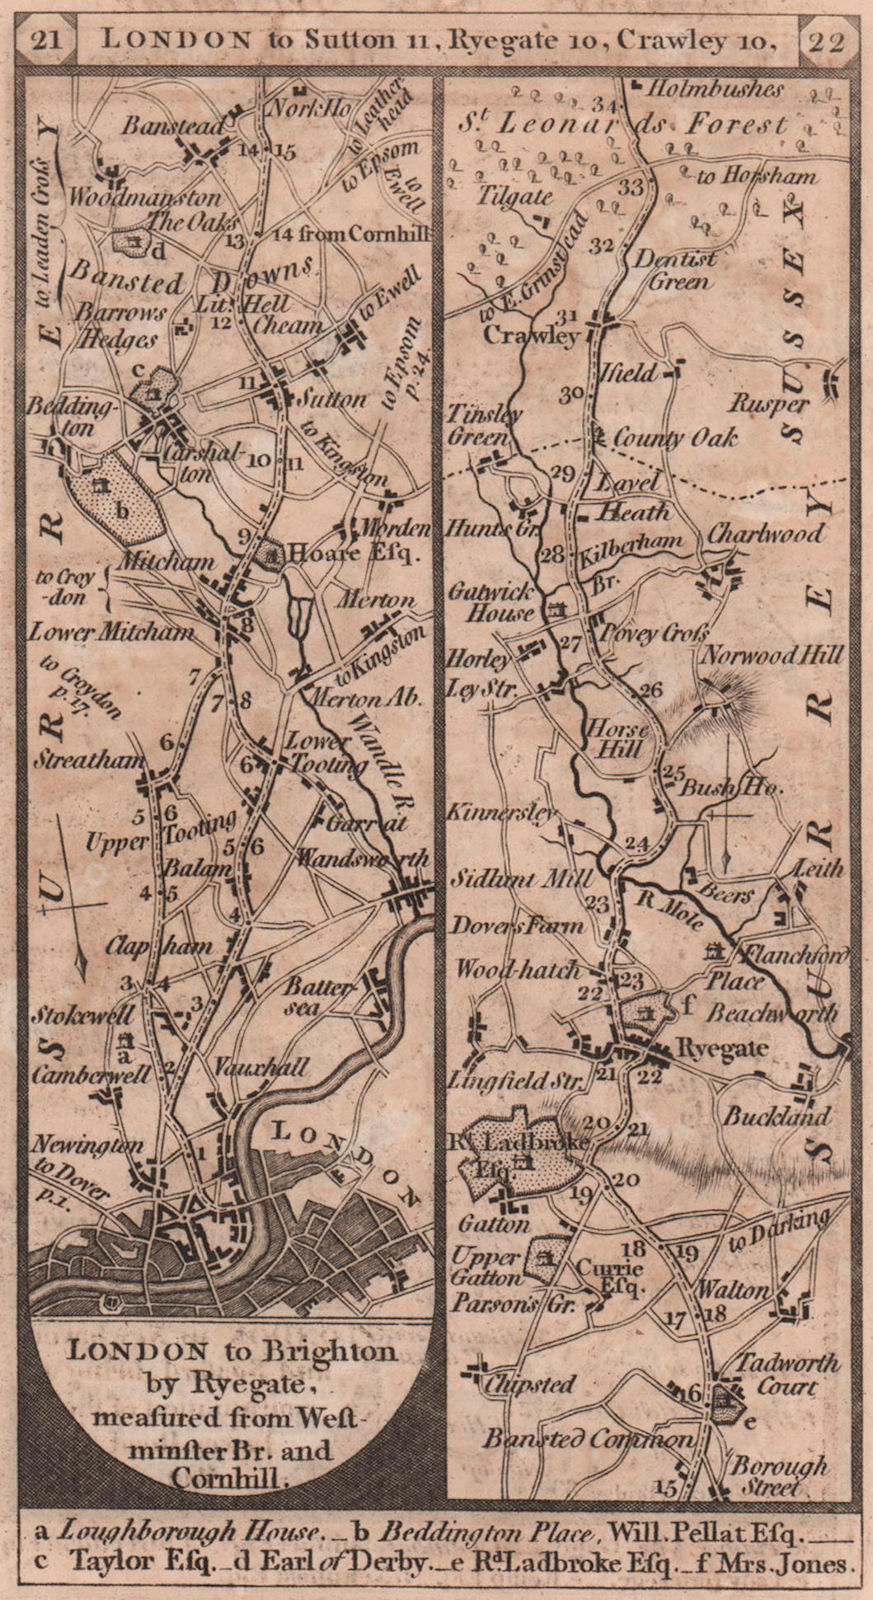 Wandsworth-Clapham-Carshalton-Reigate-Crawley road strip map PATERSON 1803